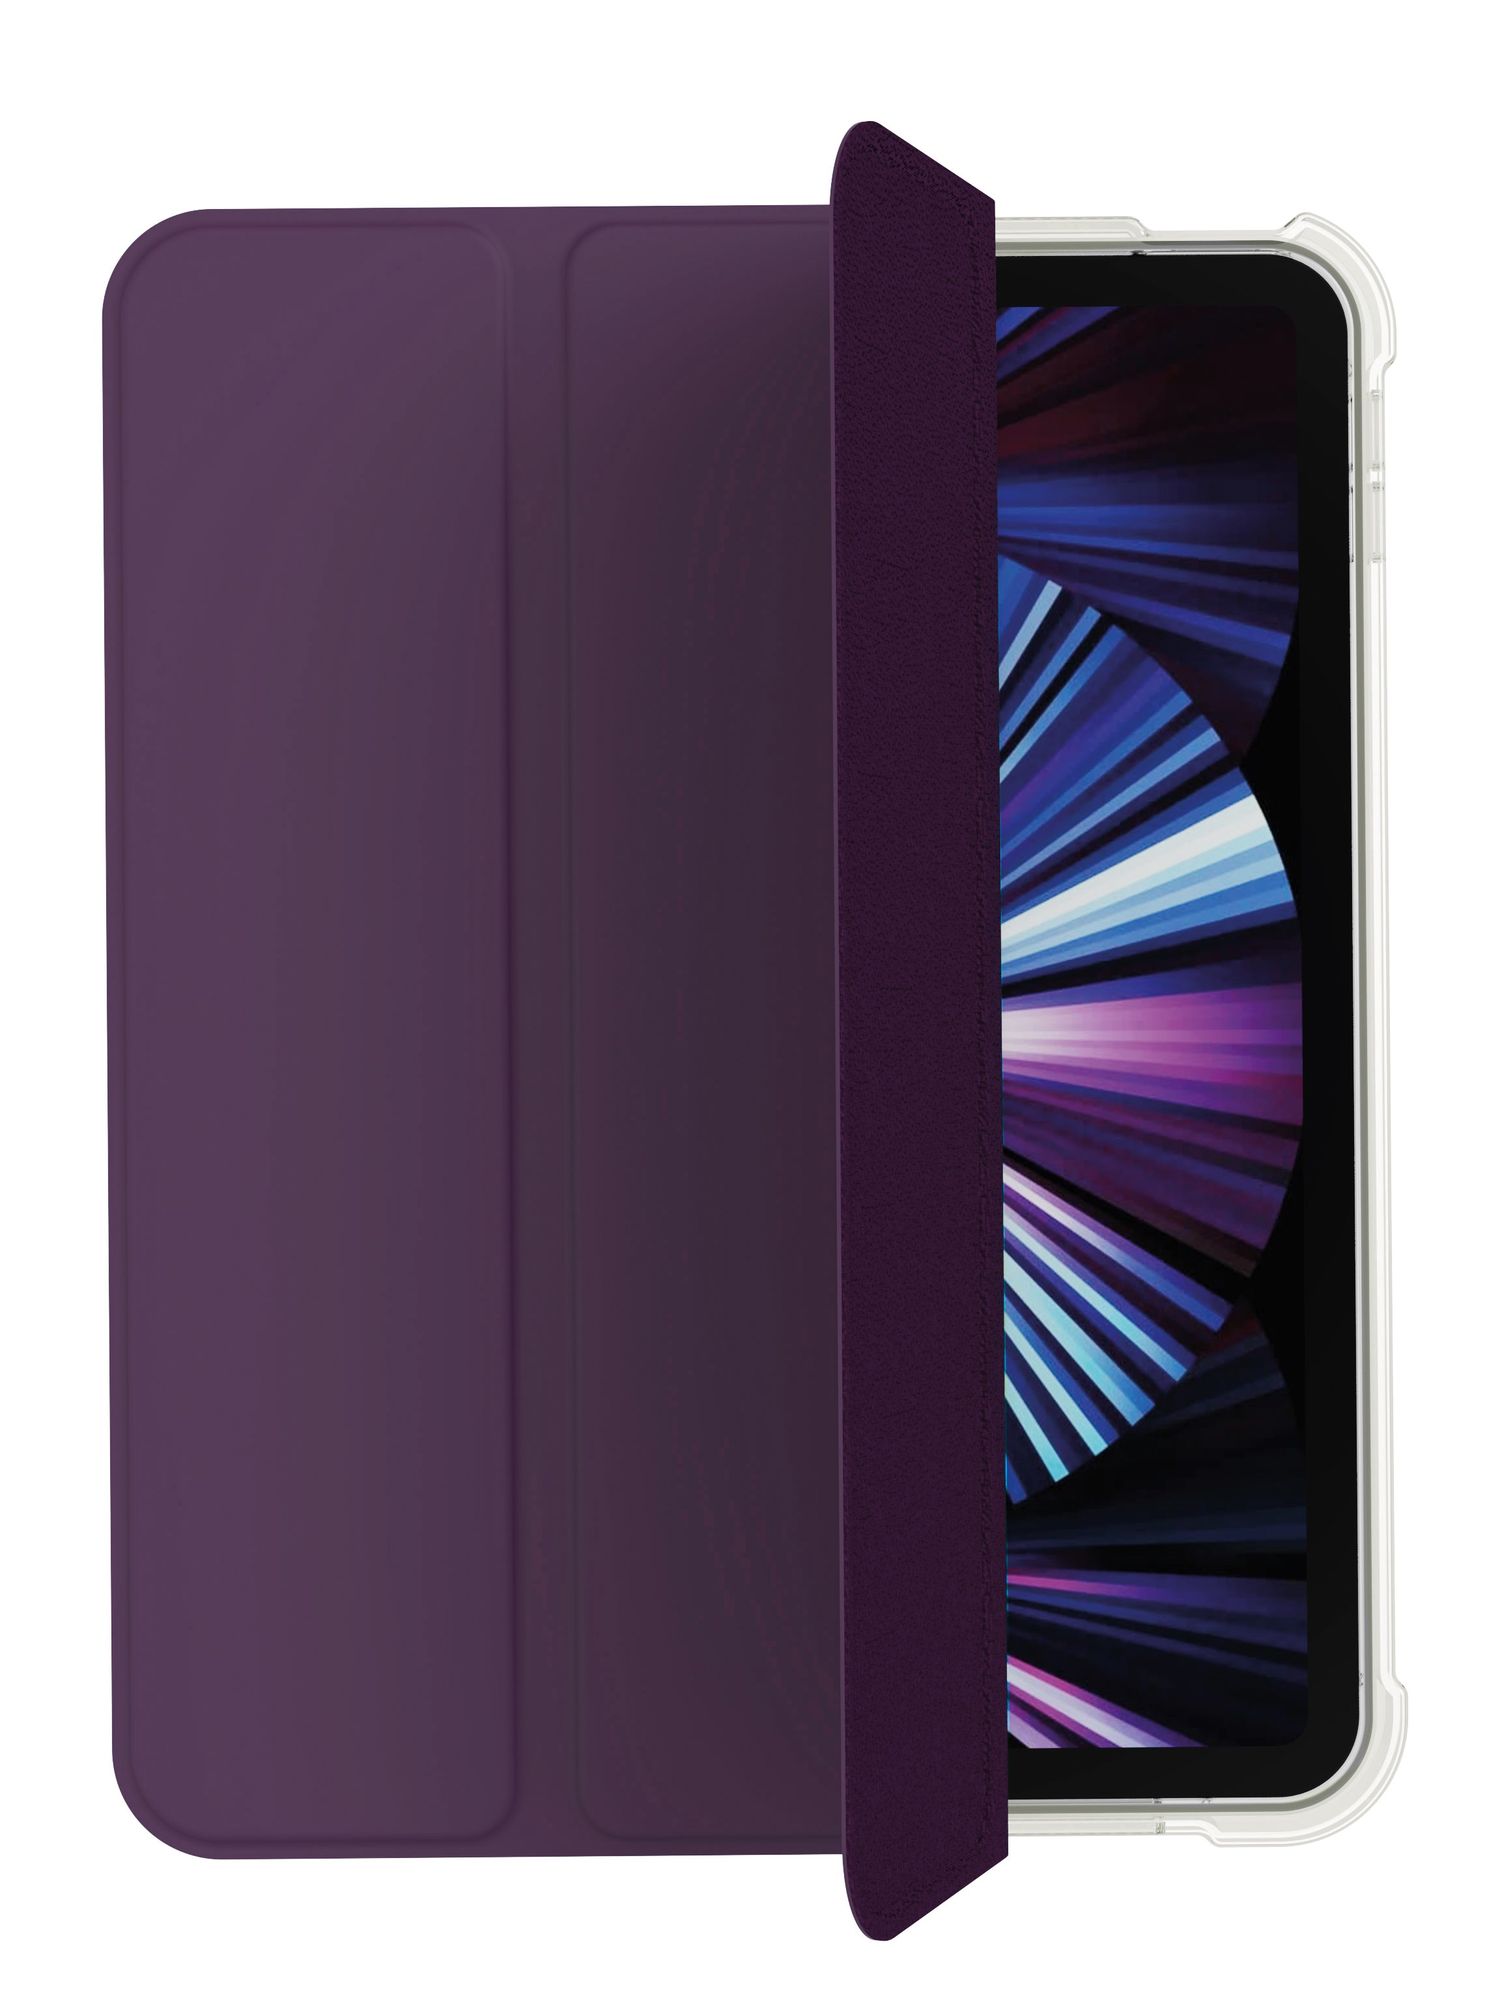 Чехол защитный VLP Dual Folio Case для iPad 10, темно-фиолетовый sesame street ipad case for ipad 2 3 ipad air 1 2 ipad pro 9 7 ipad 5 6th gen 2017 2018 9 7 leather tablet stand folio cover